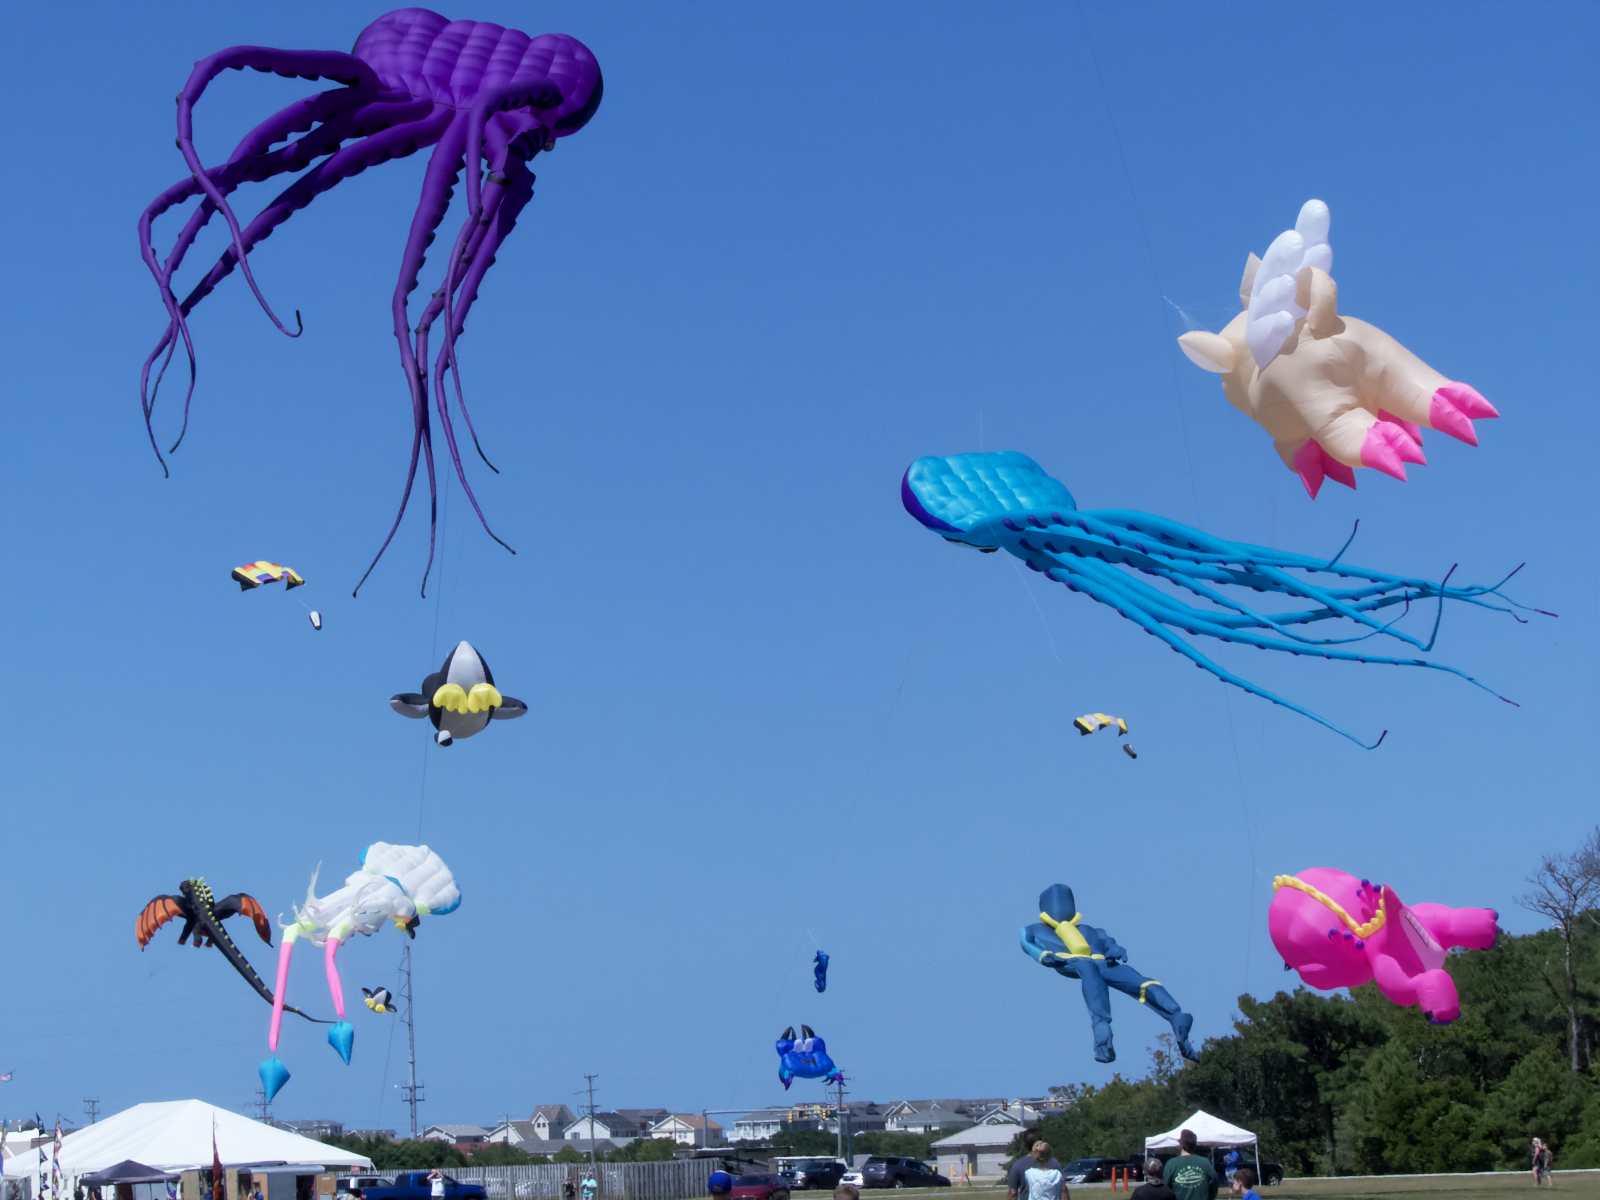 Kites flying at the Wright Kite Festival